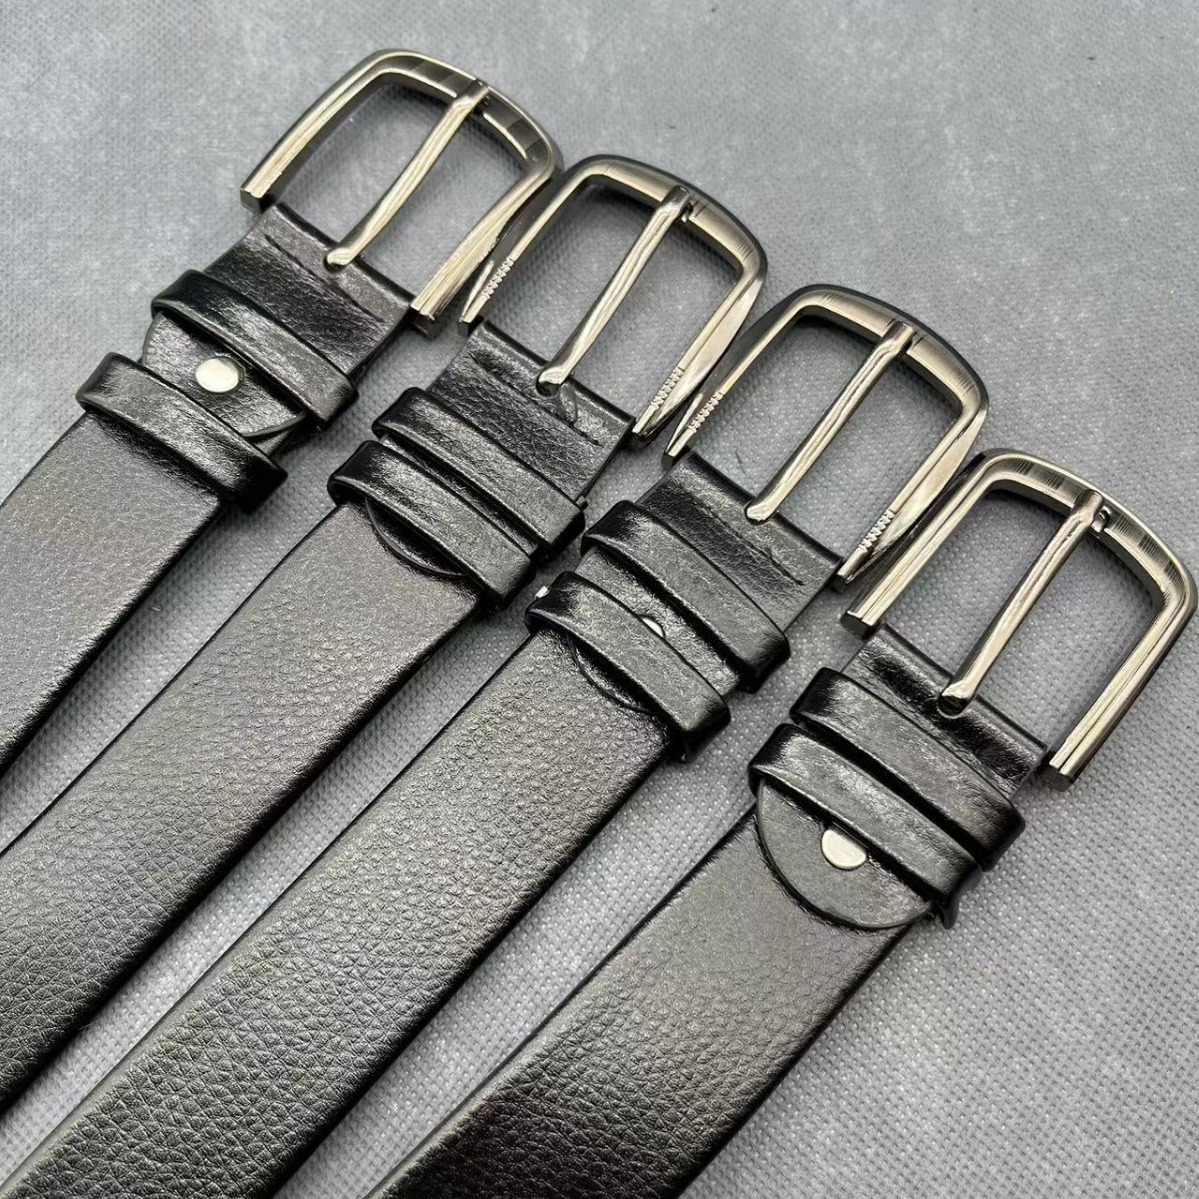 4.0pvc men‘s belt business casual pin buckle wear-resistant durable sausage belt online store supermarket dedicated for factory direct sales